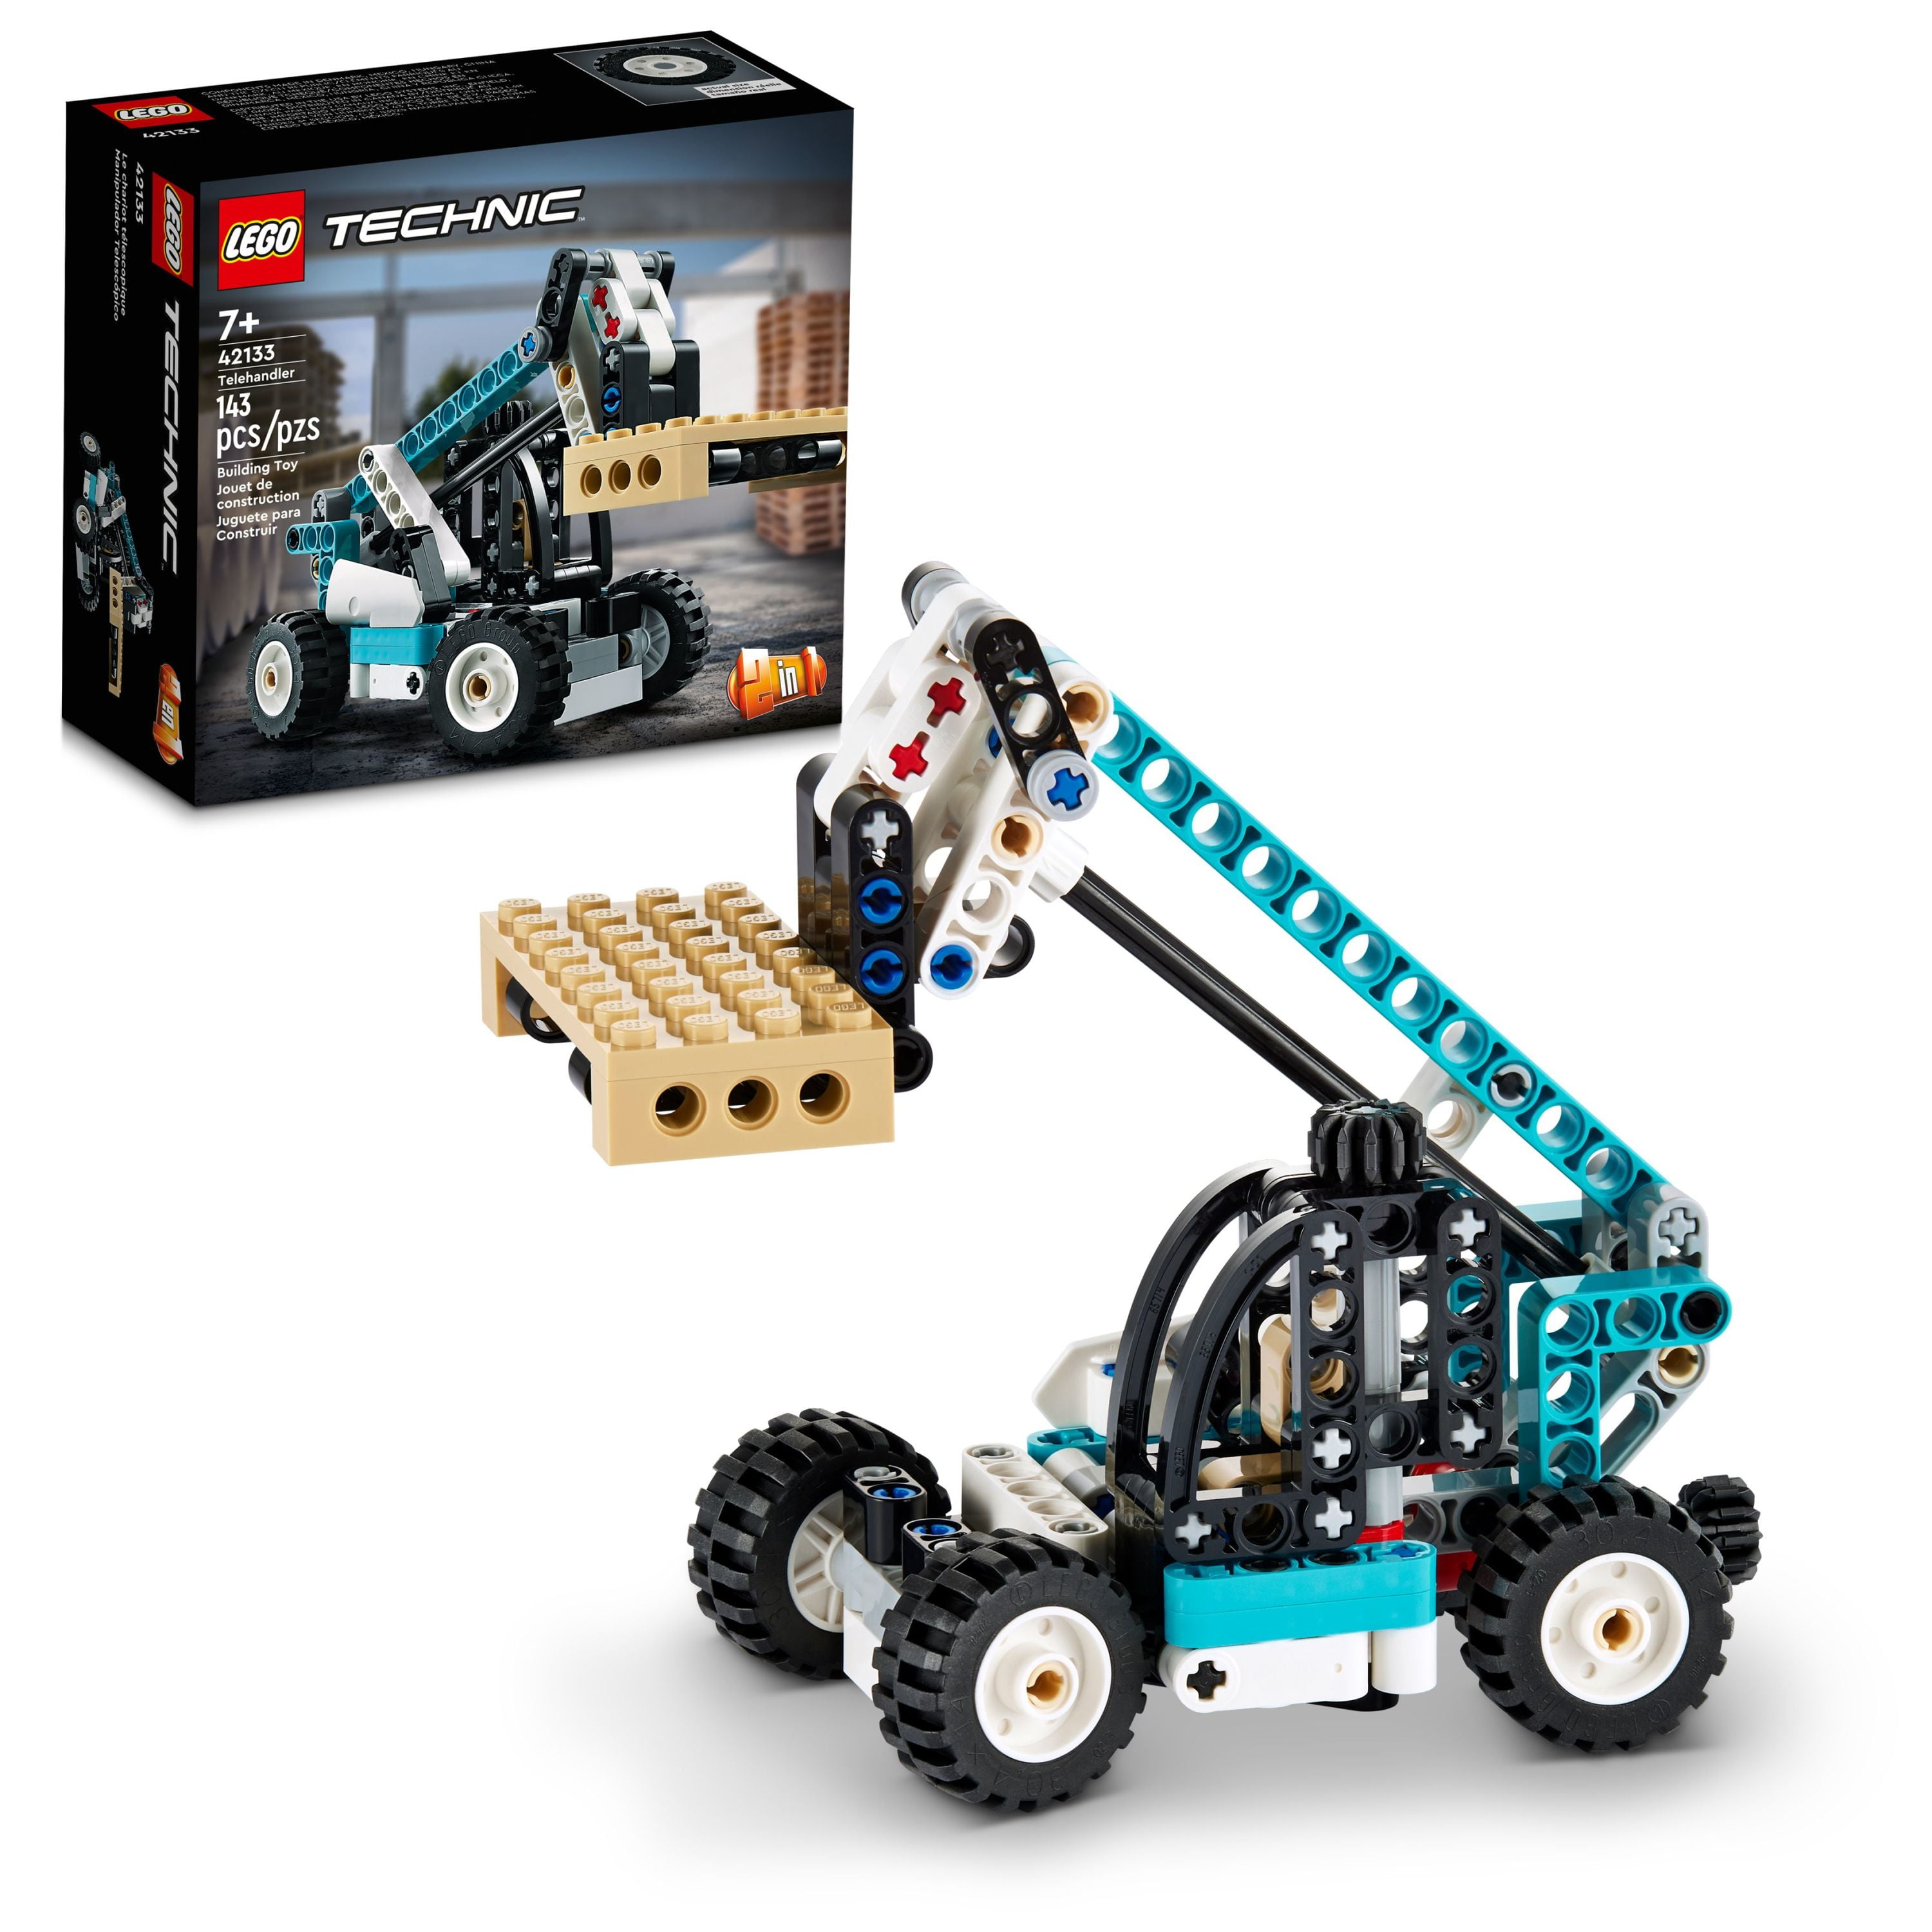 LEGO Technic Telehandler 42133 2in1 Educational Toy, Forklift to Truck Construction Toy Building Set, Model Truck Toys for Kids, Boys Girls 7 Plus - Walmart.com